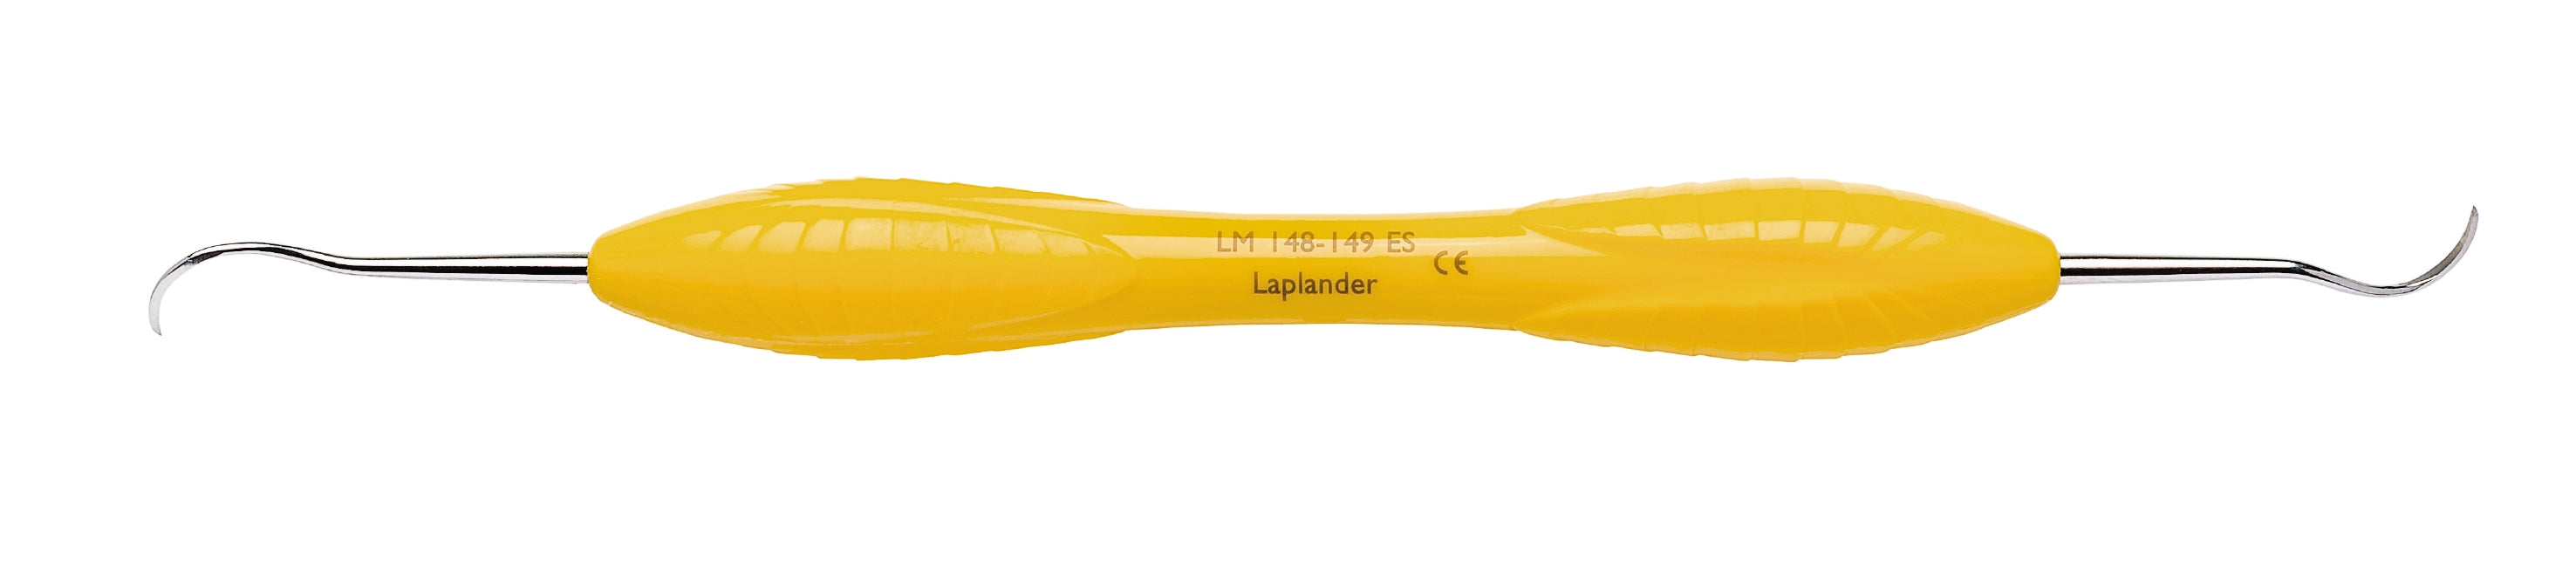 LM 148-149ES Laplander, Anterior/Posterior ES